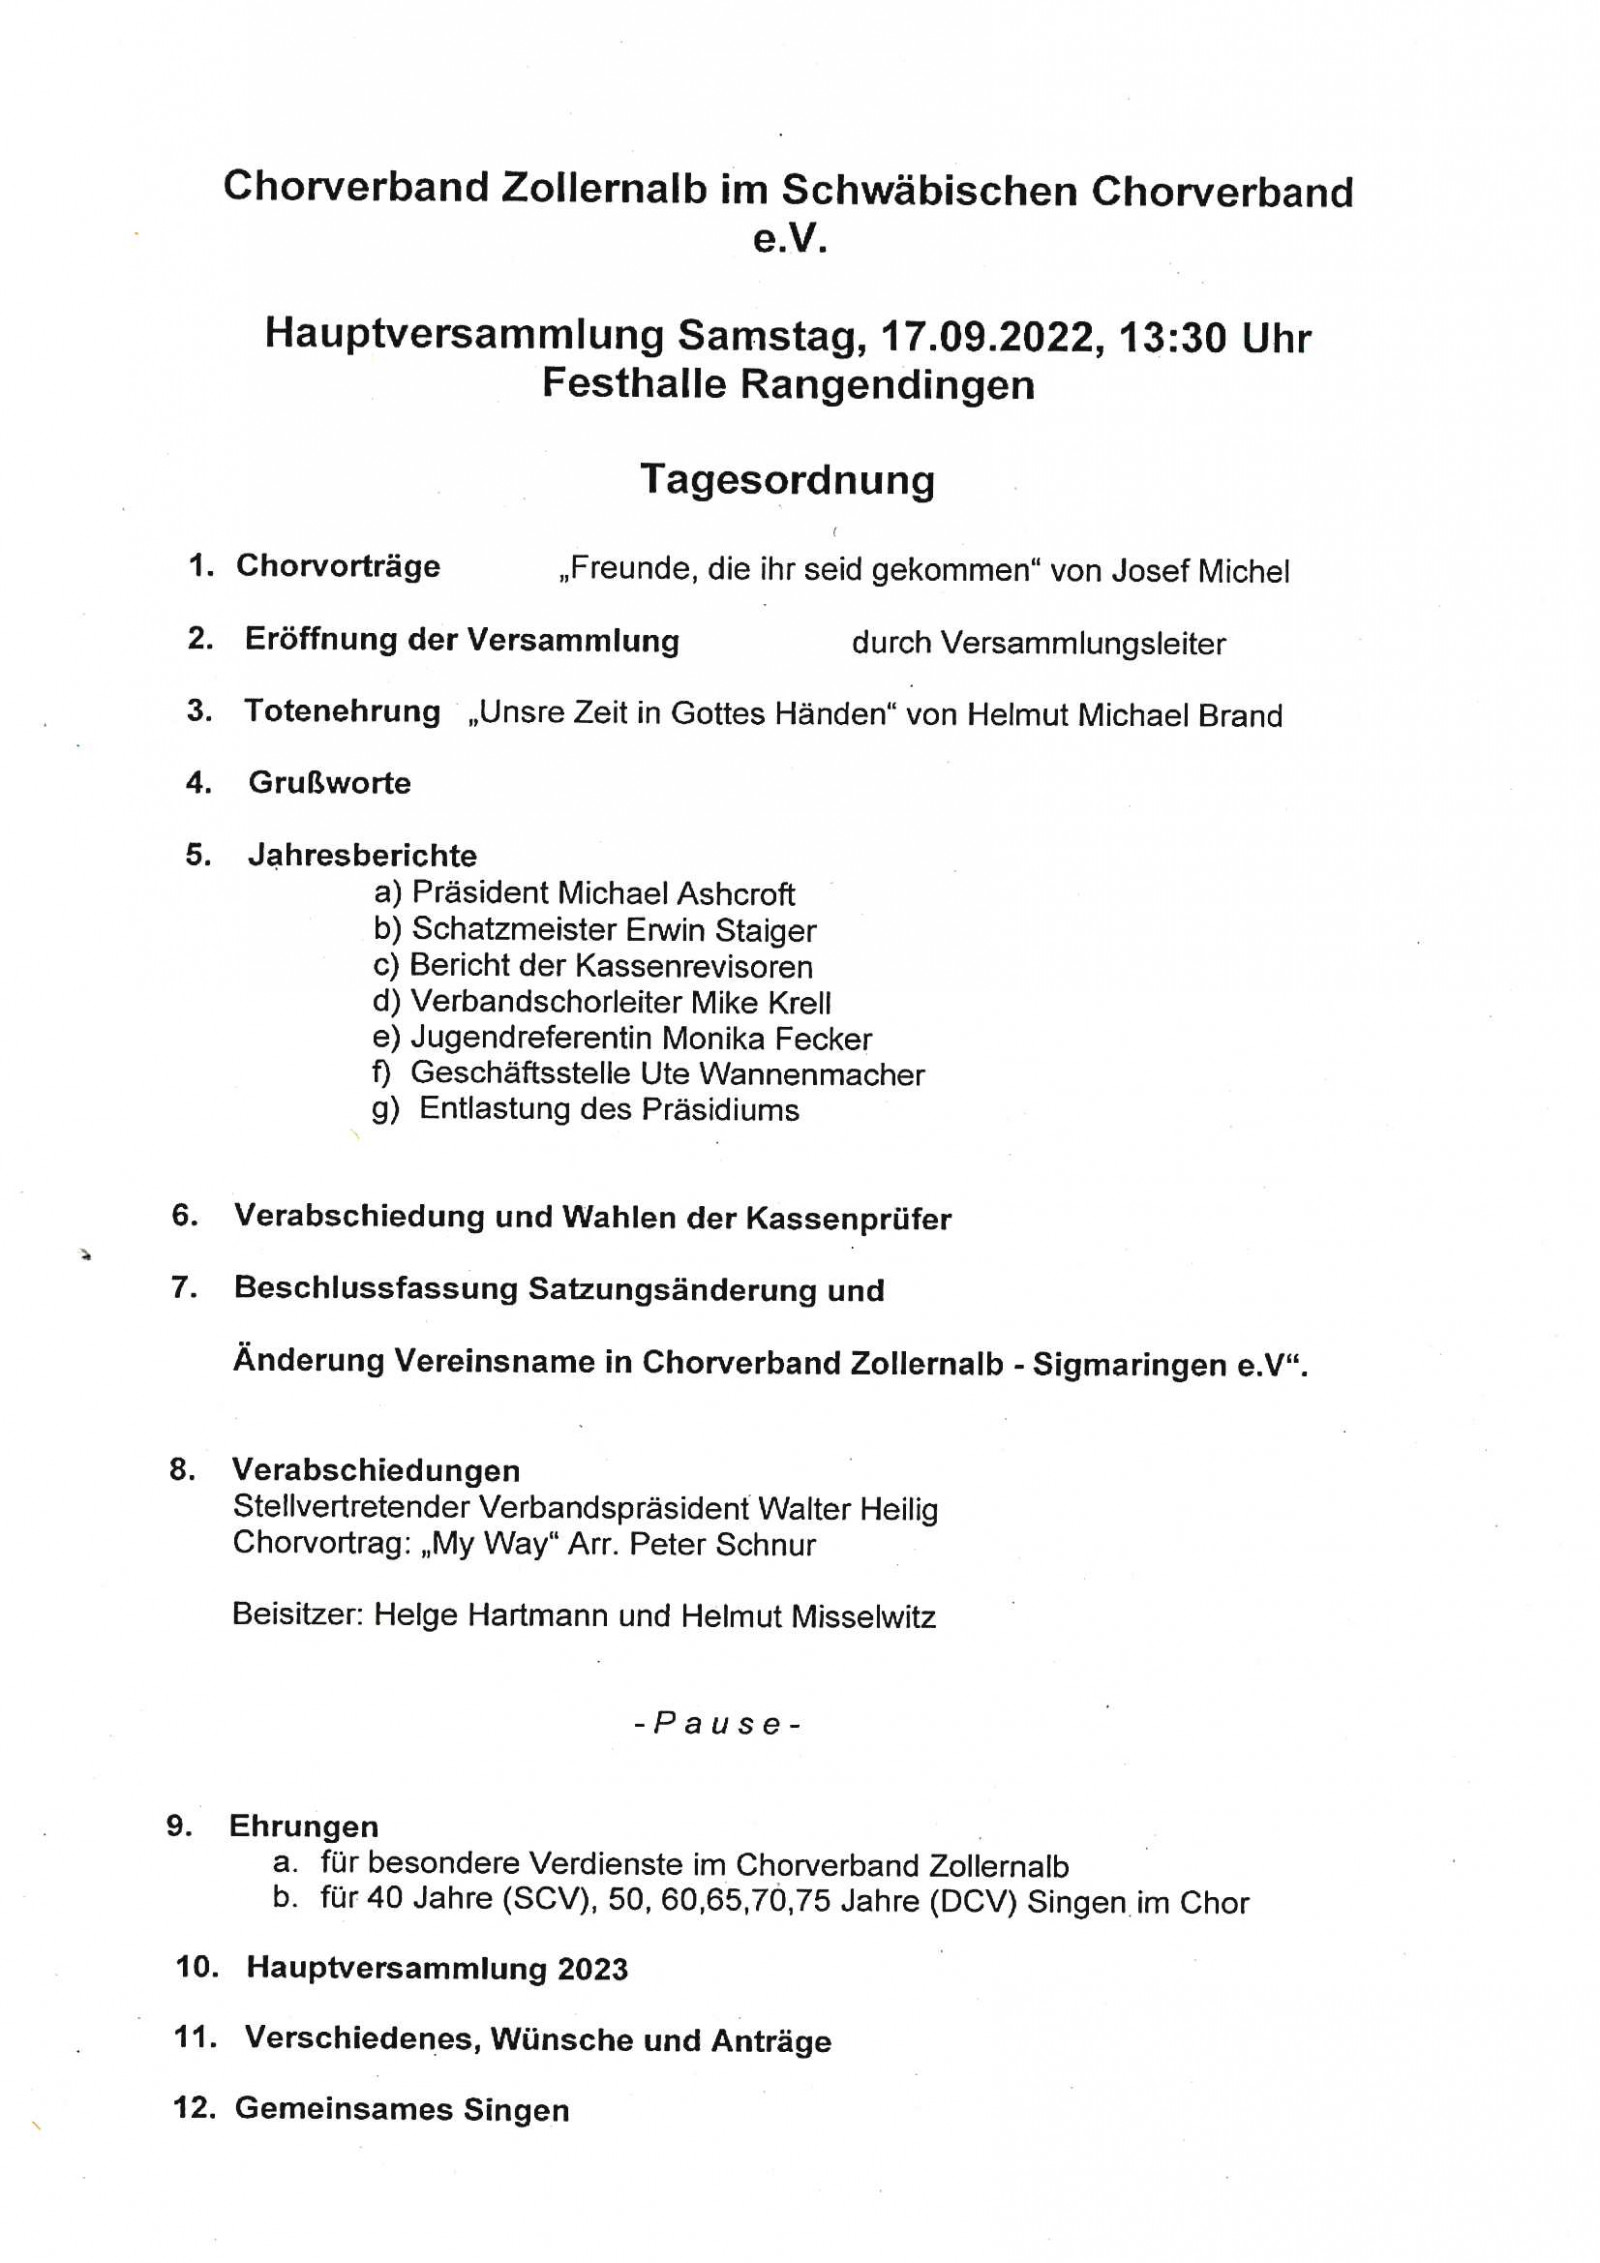 Hauptversammlung Chorverband Zollernalb 17.09.2022